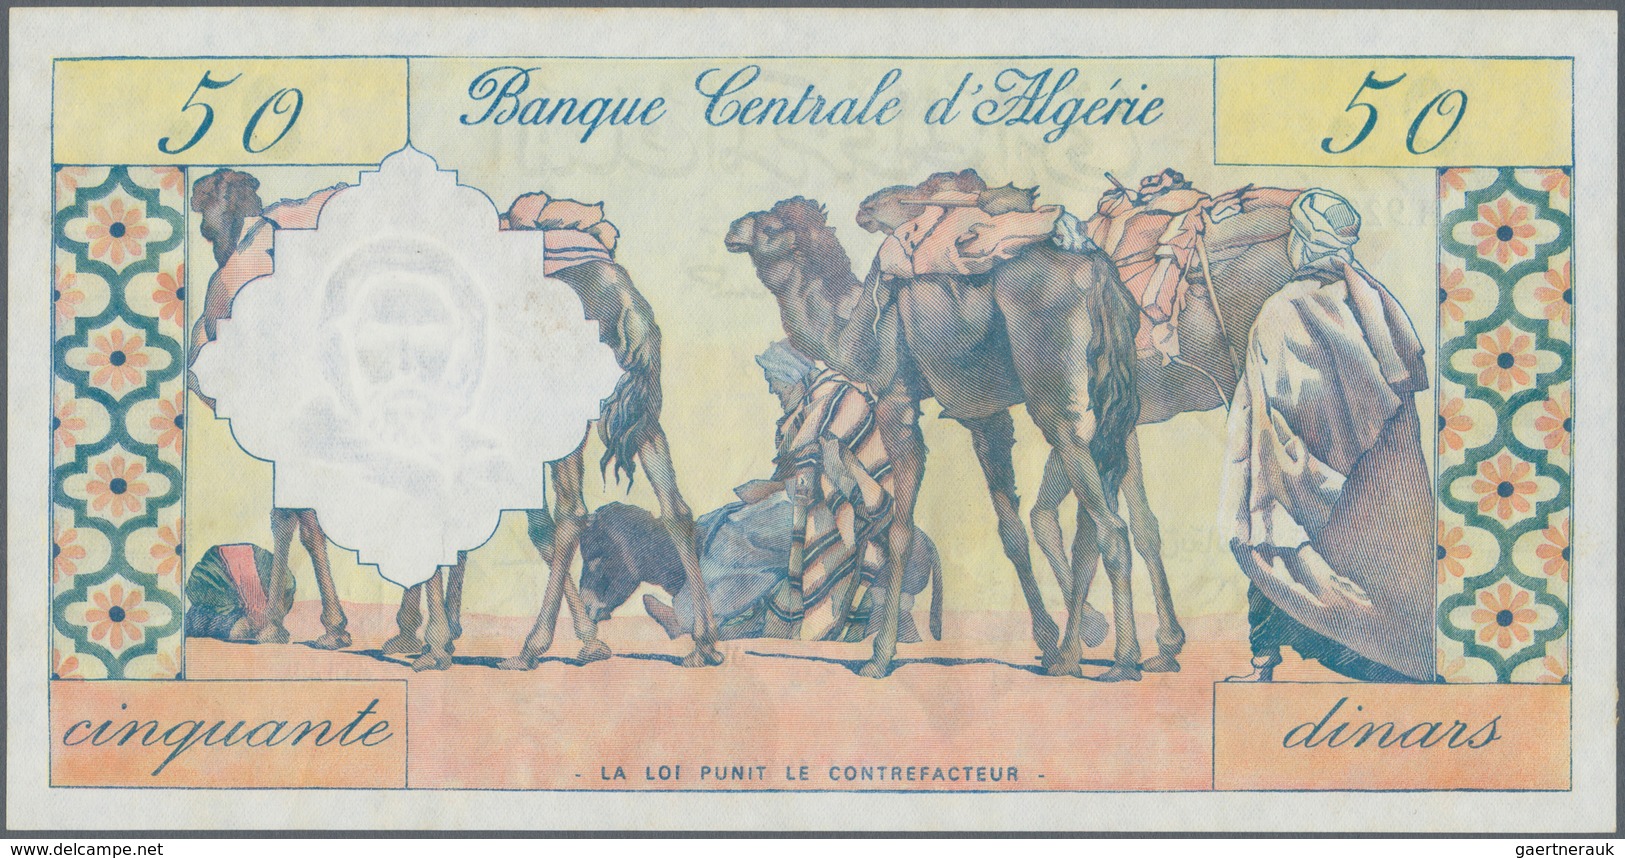 Algeria / Algerien: 50 Dinars 1964 Banque De L'Algerie P.124, Beautiful Design Banknote, More Rarely - Algeria